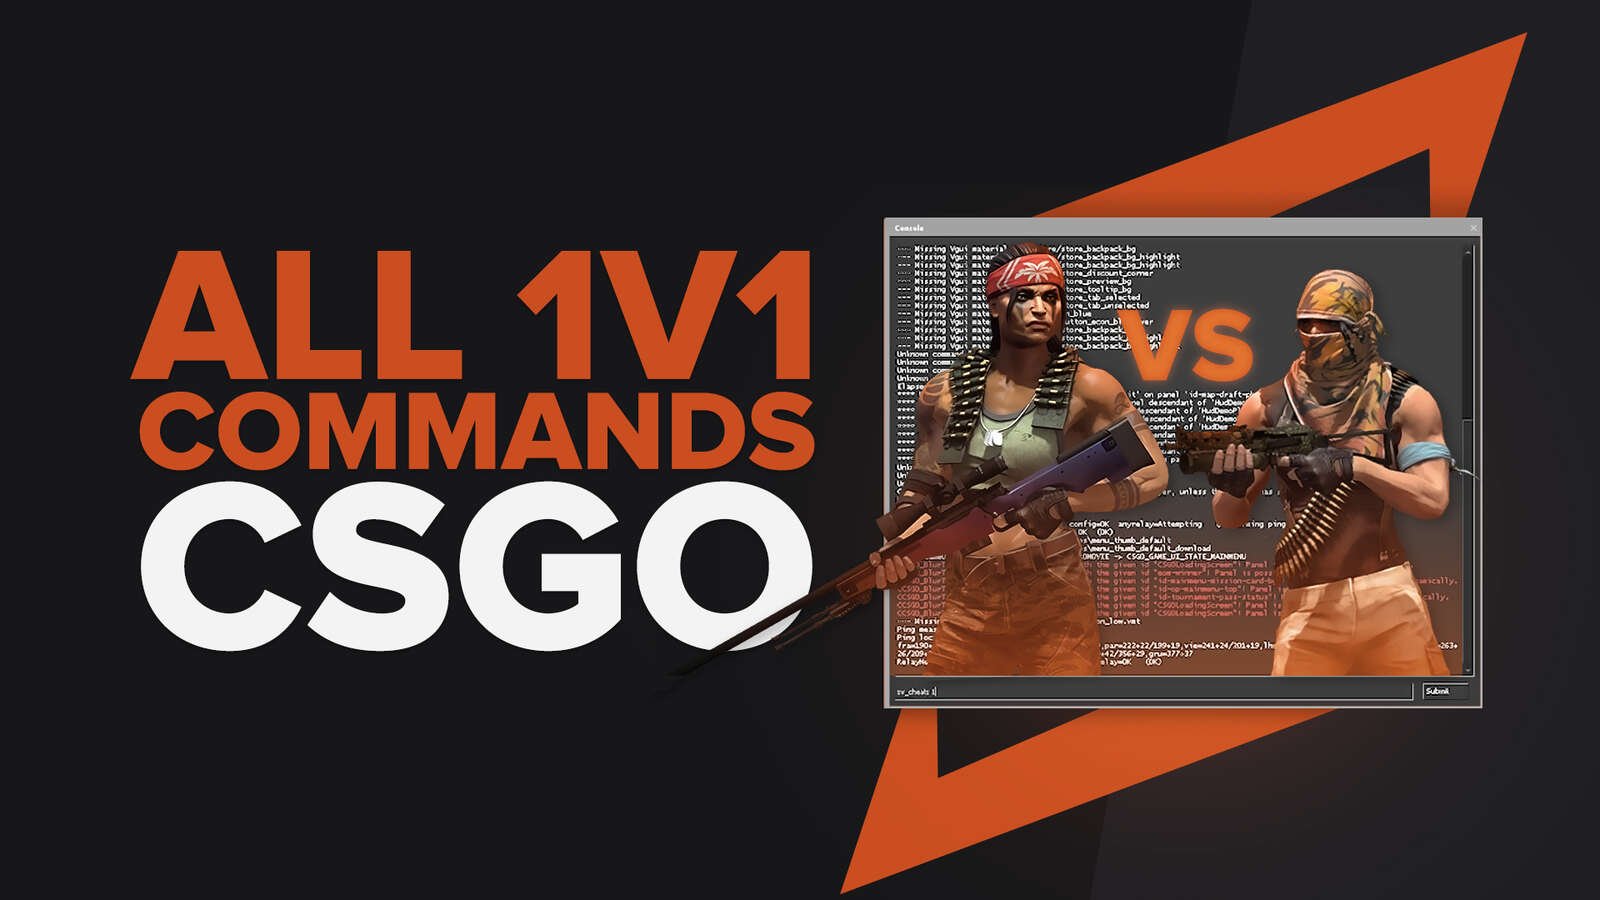 All 1v1 Commands in CS:GO